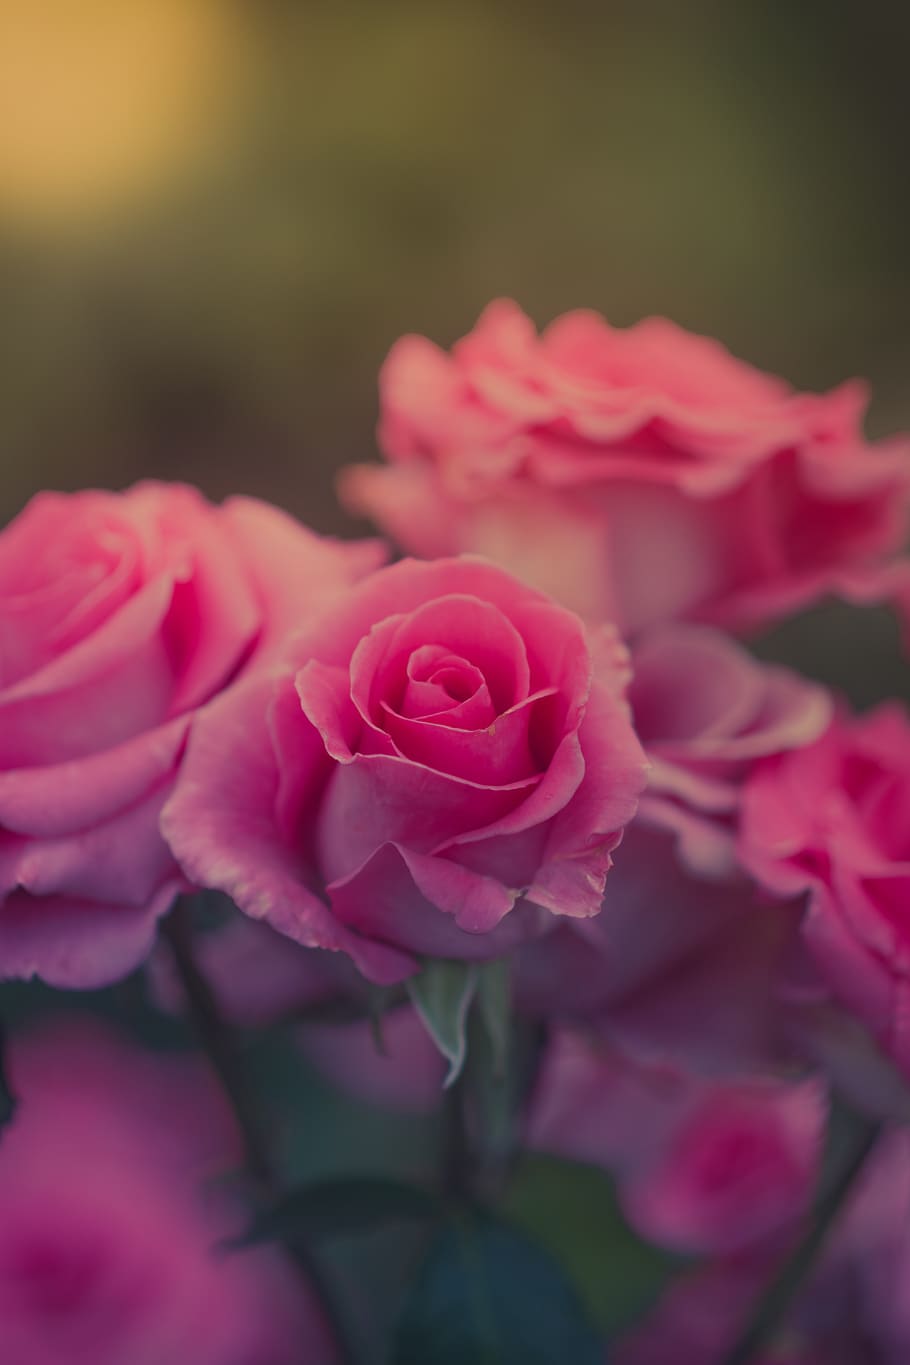 merah muda, bunga, mawar, kelopak, alam, tanaman, kabur, tanaman berbunga, keindahan di alam, warna merah muda